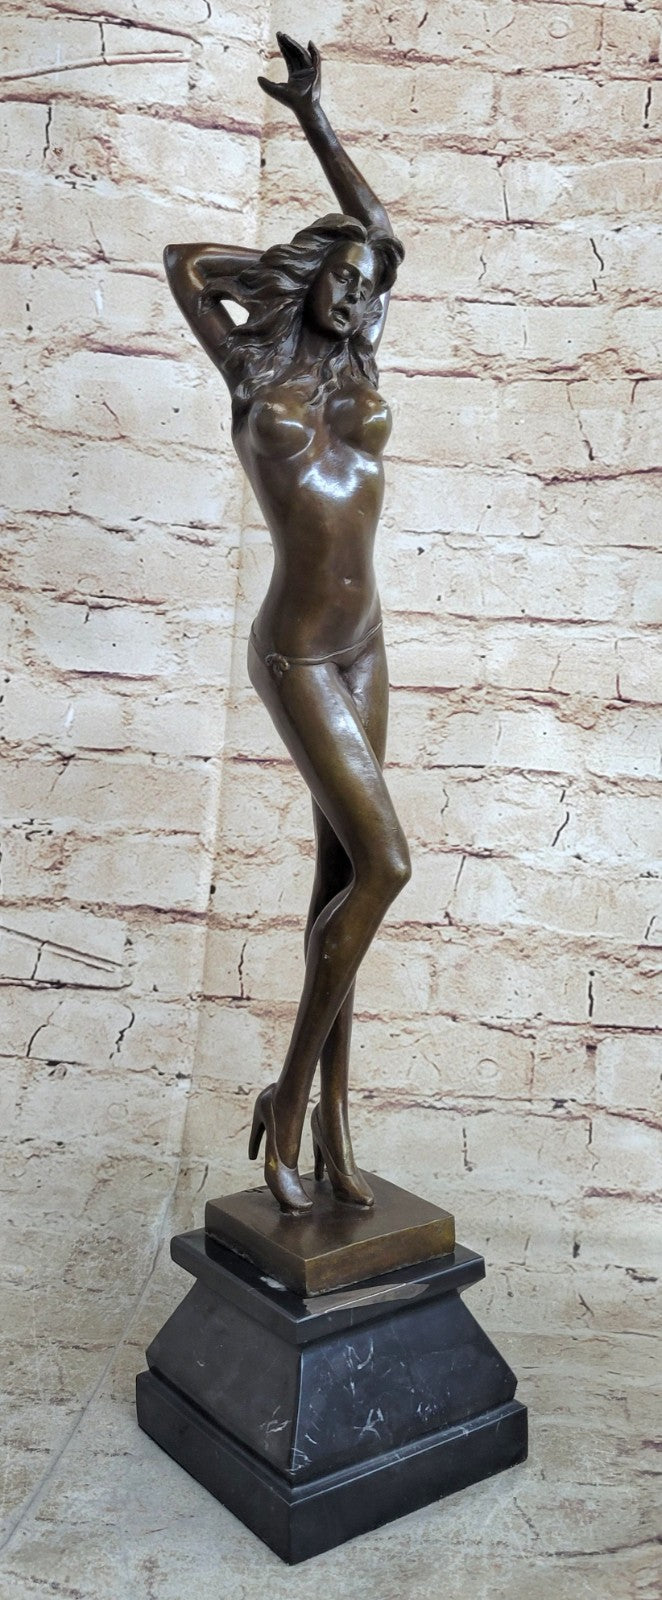 Handcrafted bronze sculpture SALE Nude Deco Art Vitaleh Qualityaldo High Signed